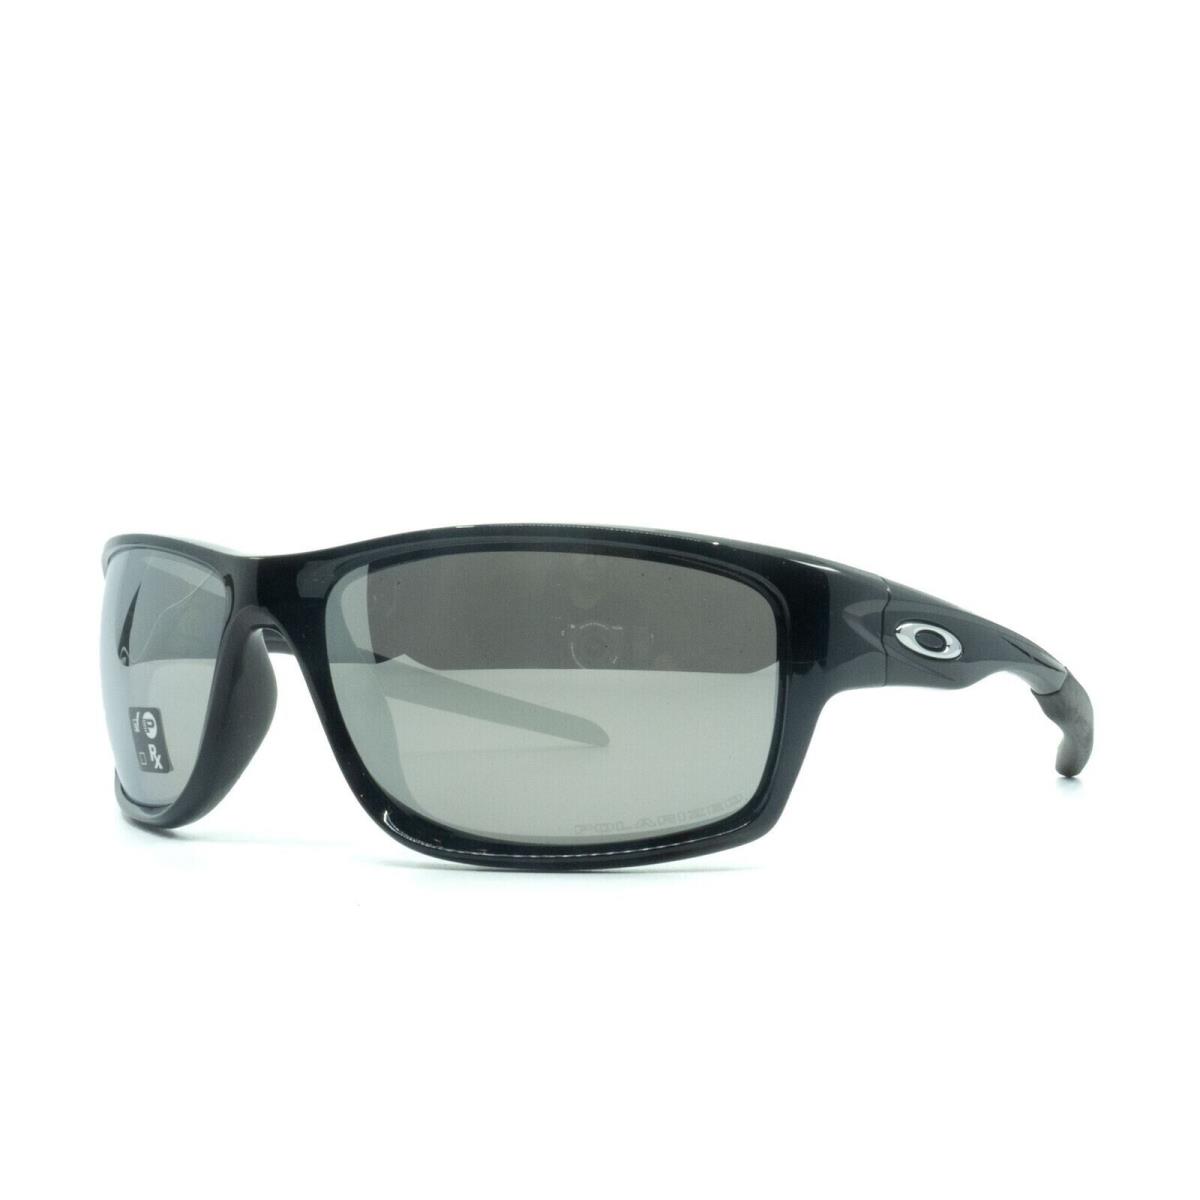 Oakley sunglasses Canteen - Black Frame, Black Lens 0